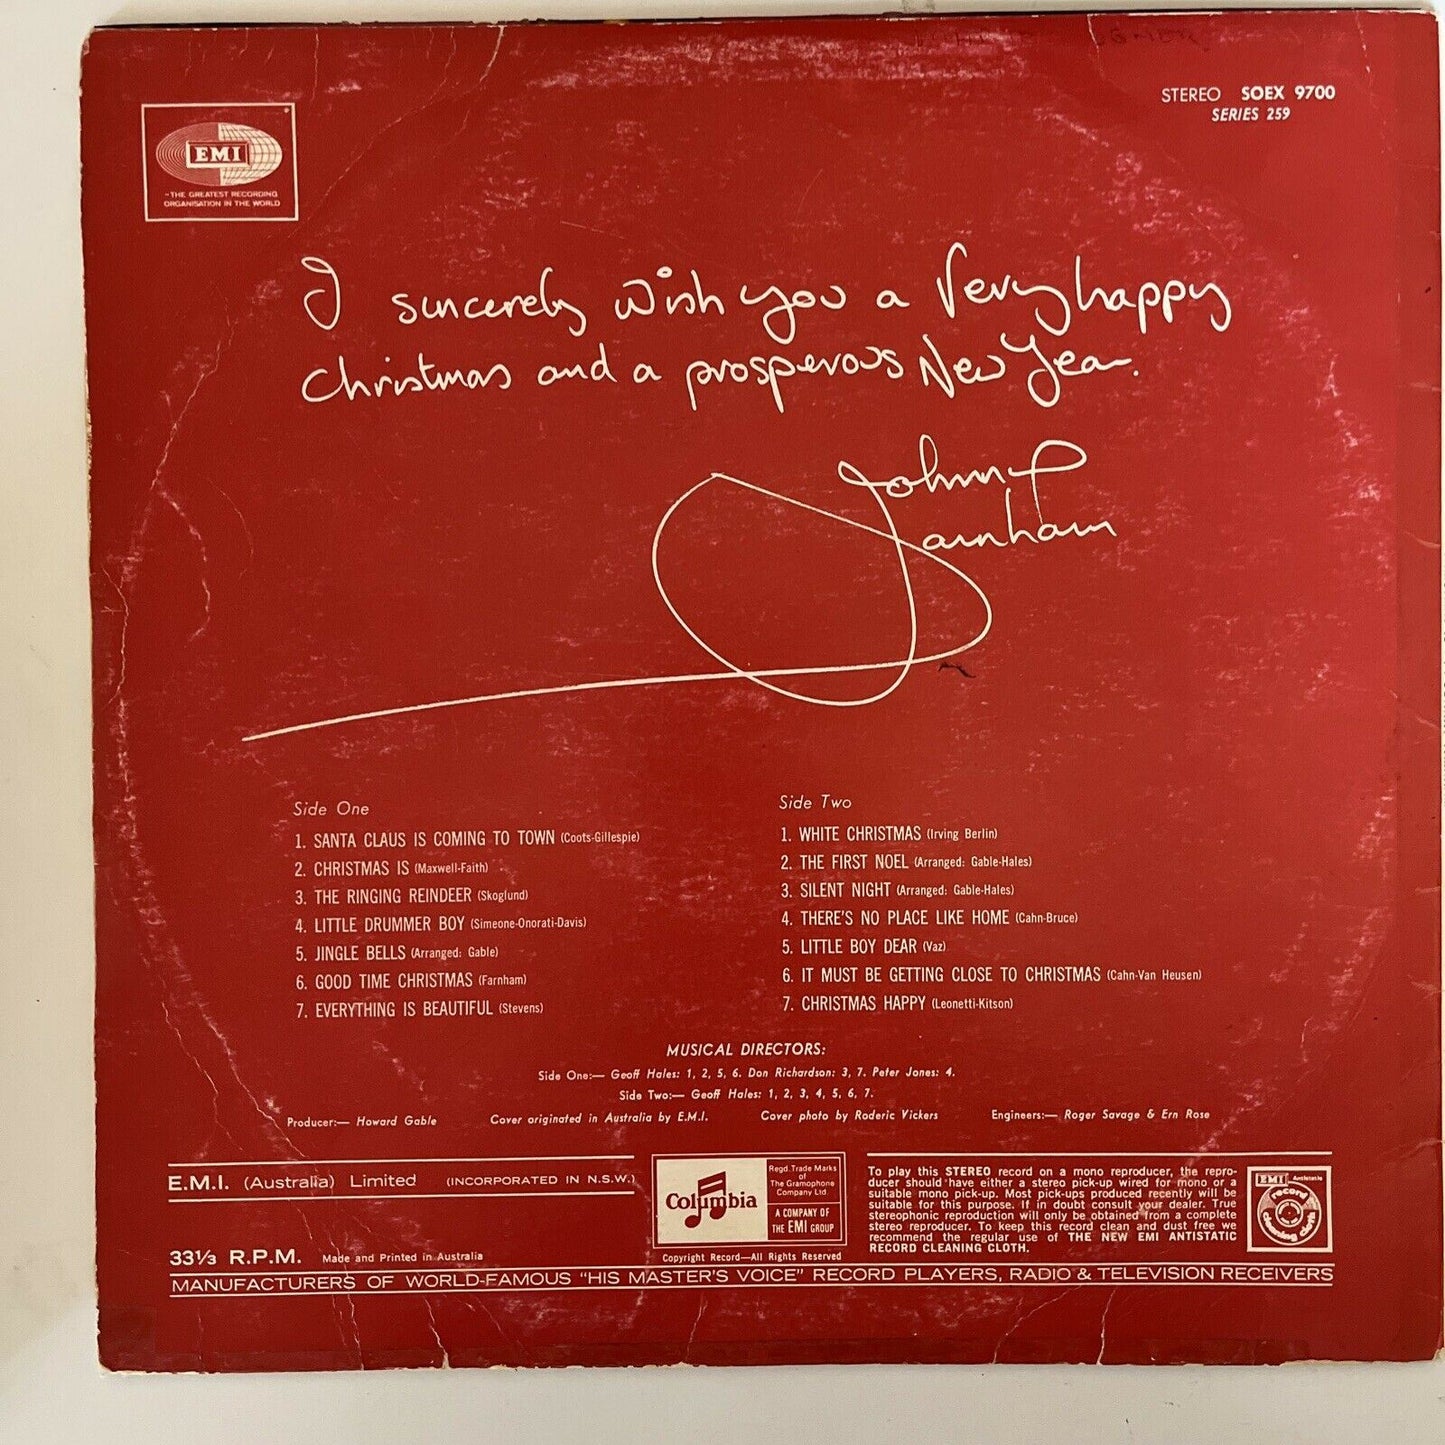 Johnny Farnham – Christmas Is... Johnny Farnham 1970 Vinyl Record LP